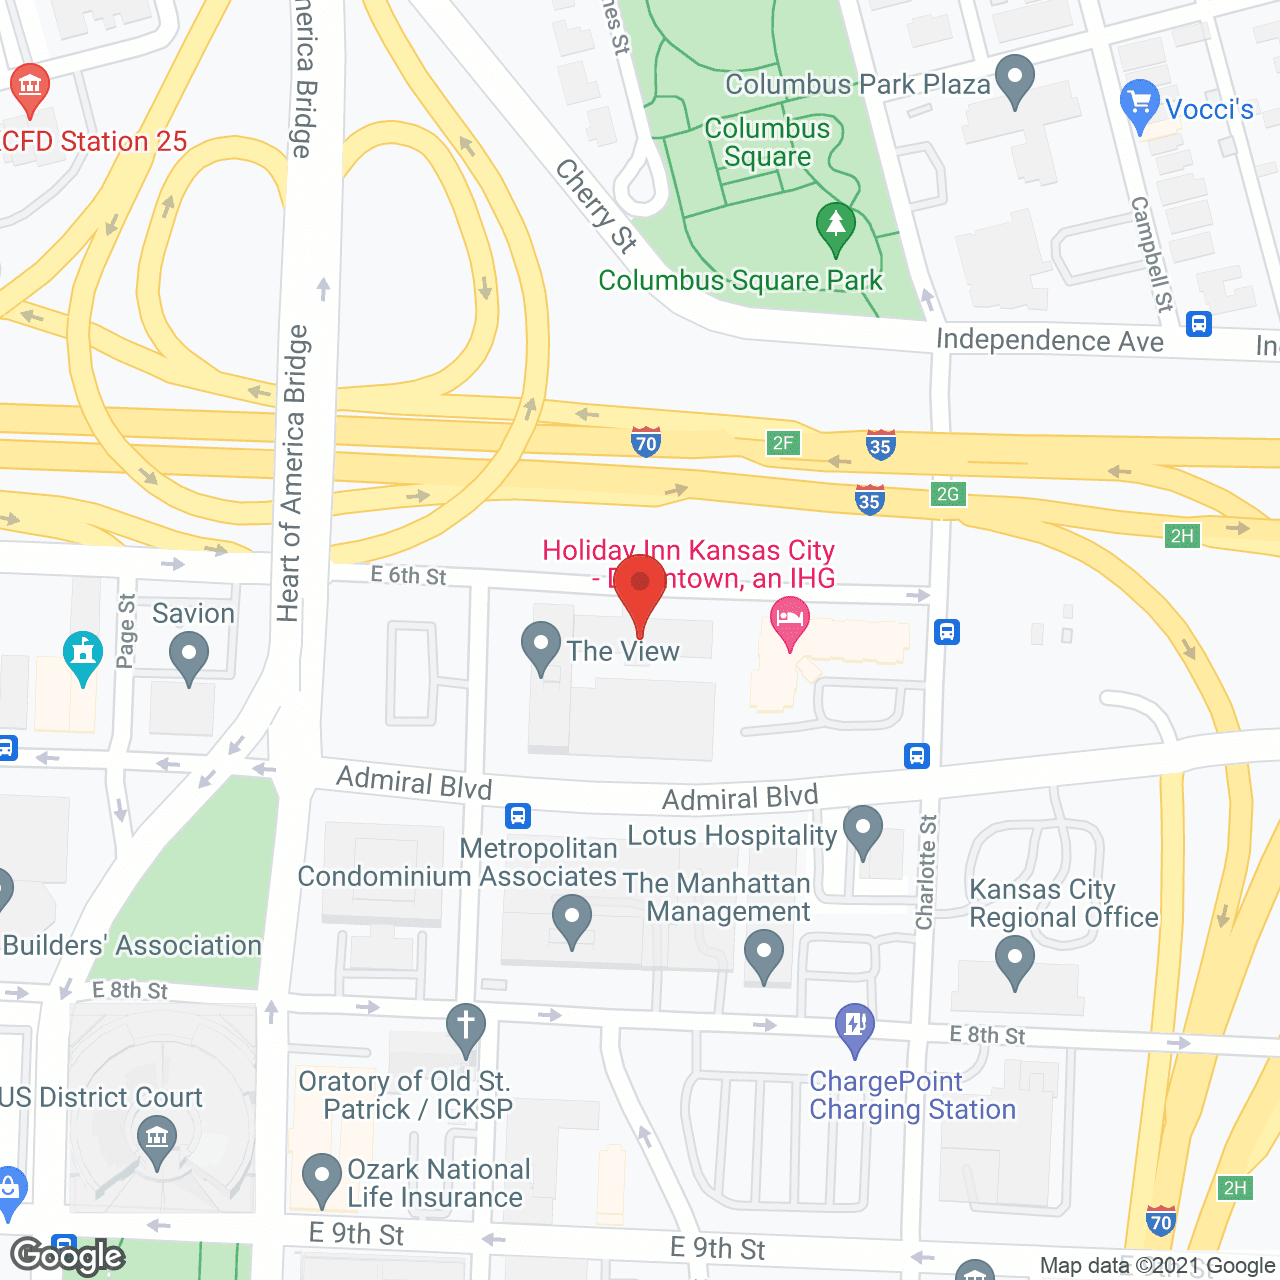 University Tower Med Pavilion in google map